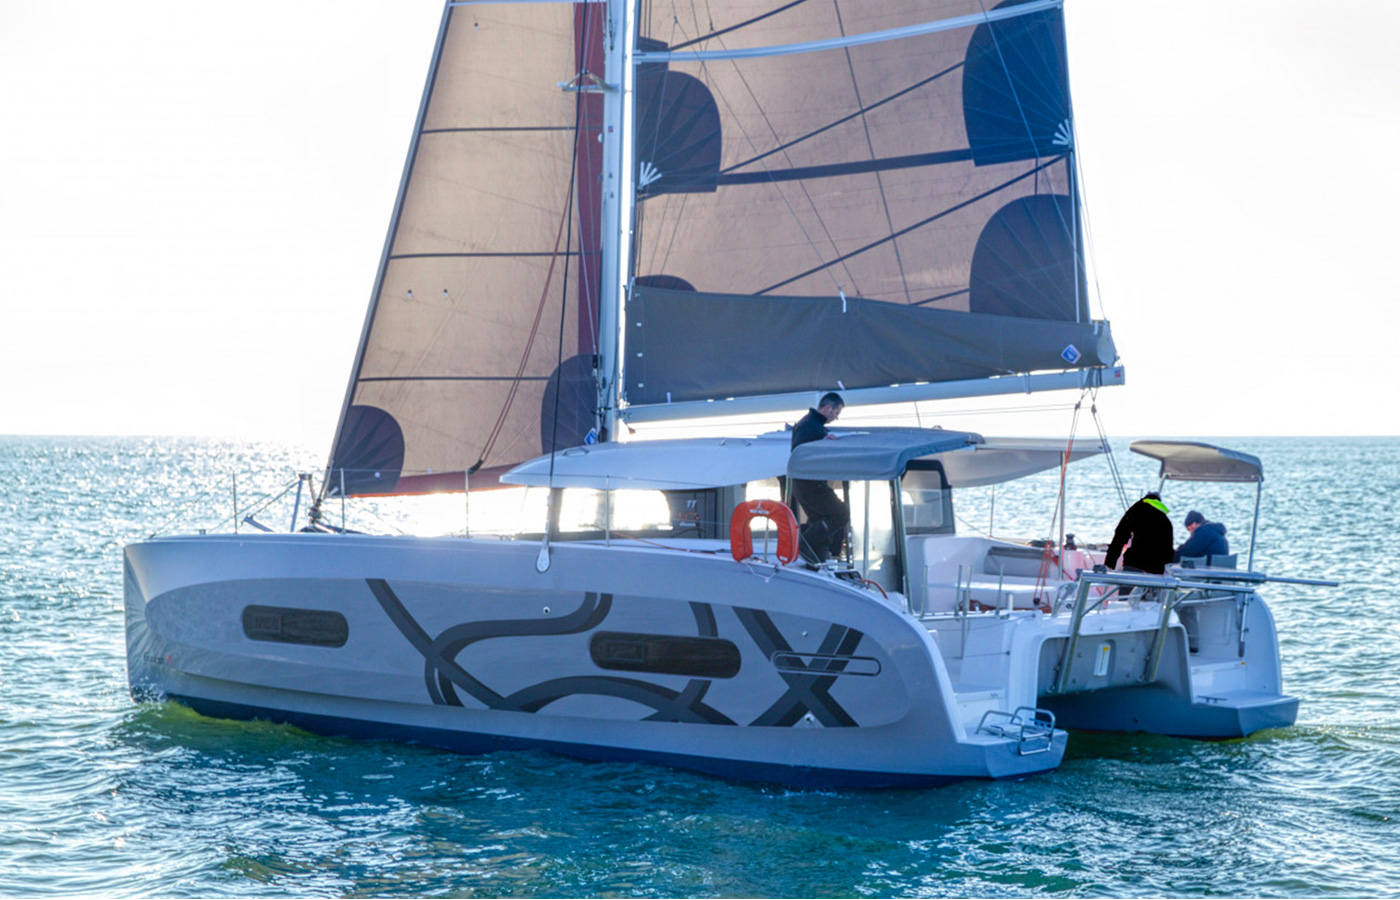 Excess 11 Catamaran To Make U.S. Debut At Miami Boat Show [Yacht Highlight]